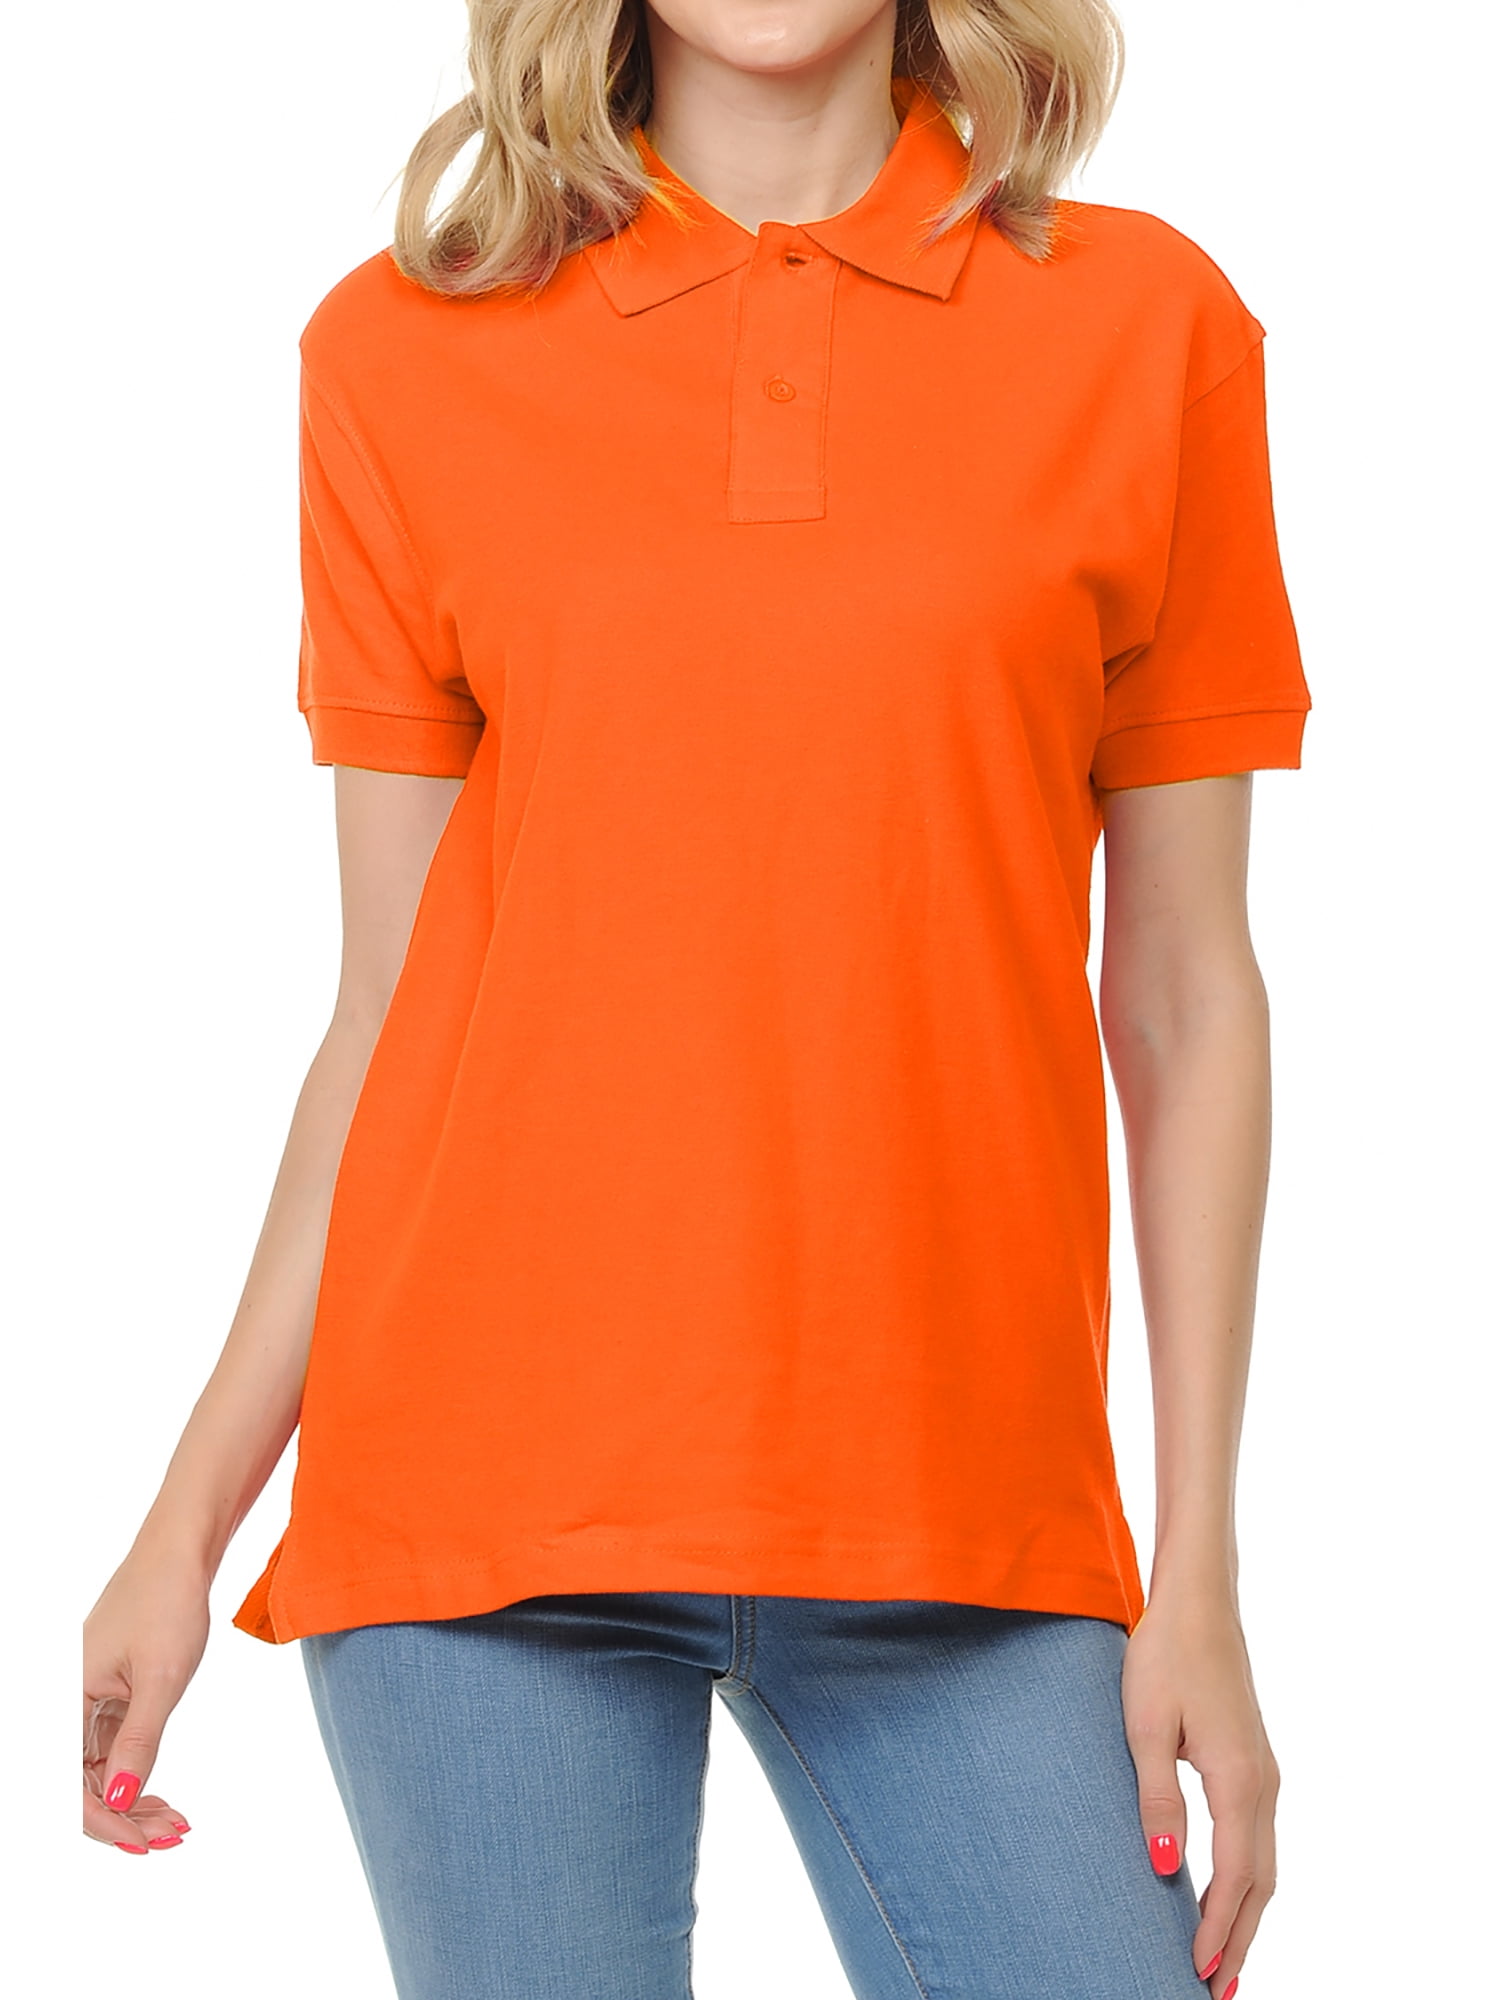 orange polo shirt womens